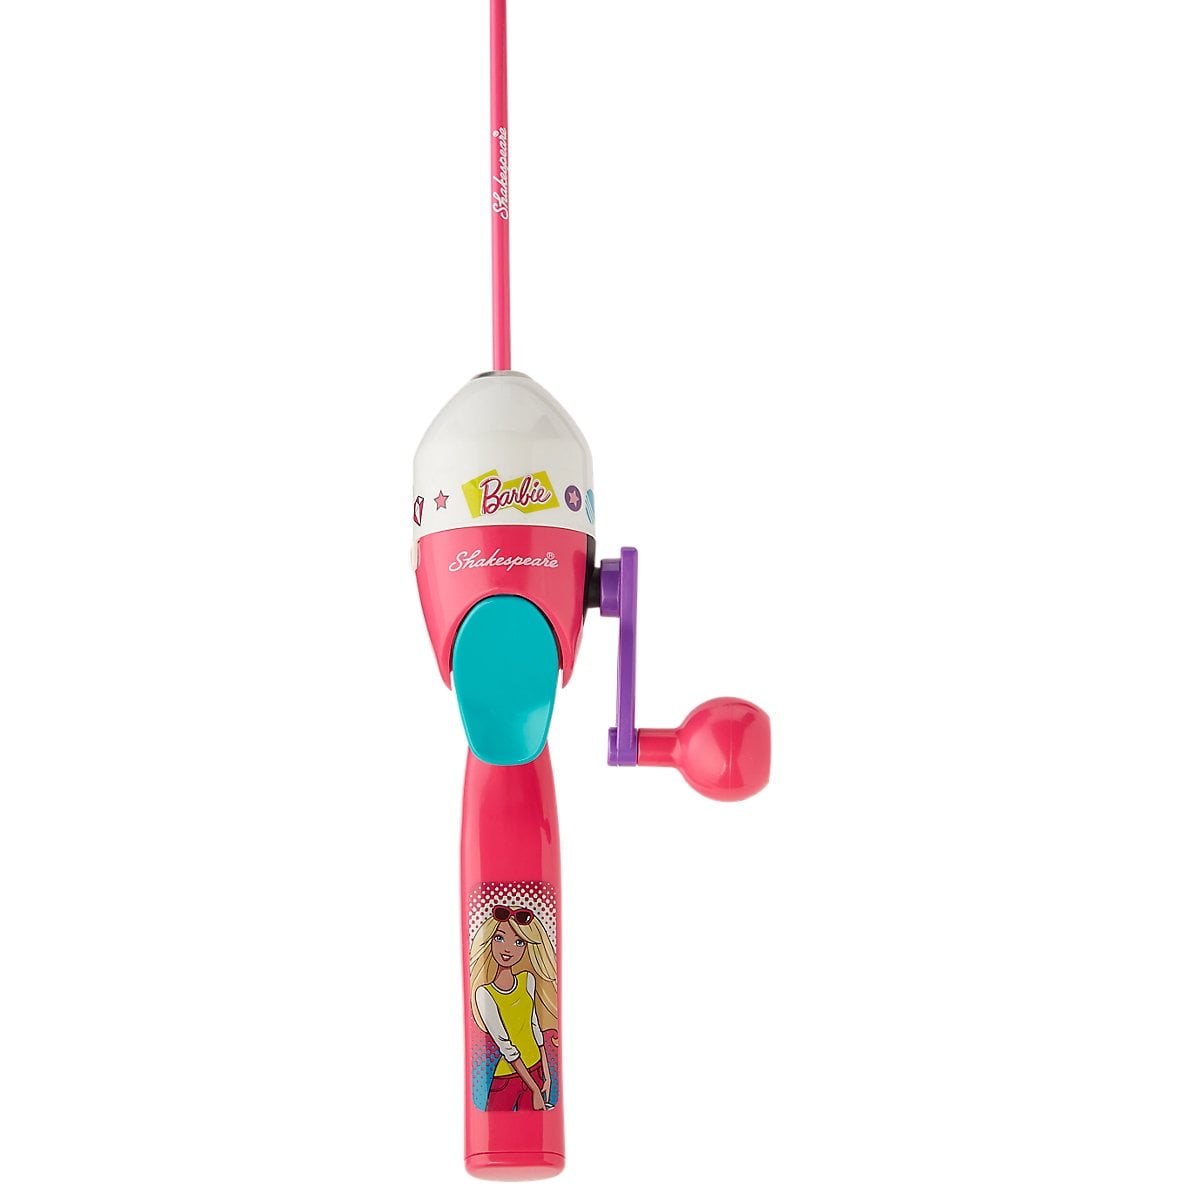 Shakespeare Mattel Barbie Kit 2'6 Spincast Combo - Kids Fishing Combo 